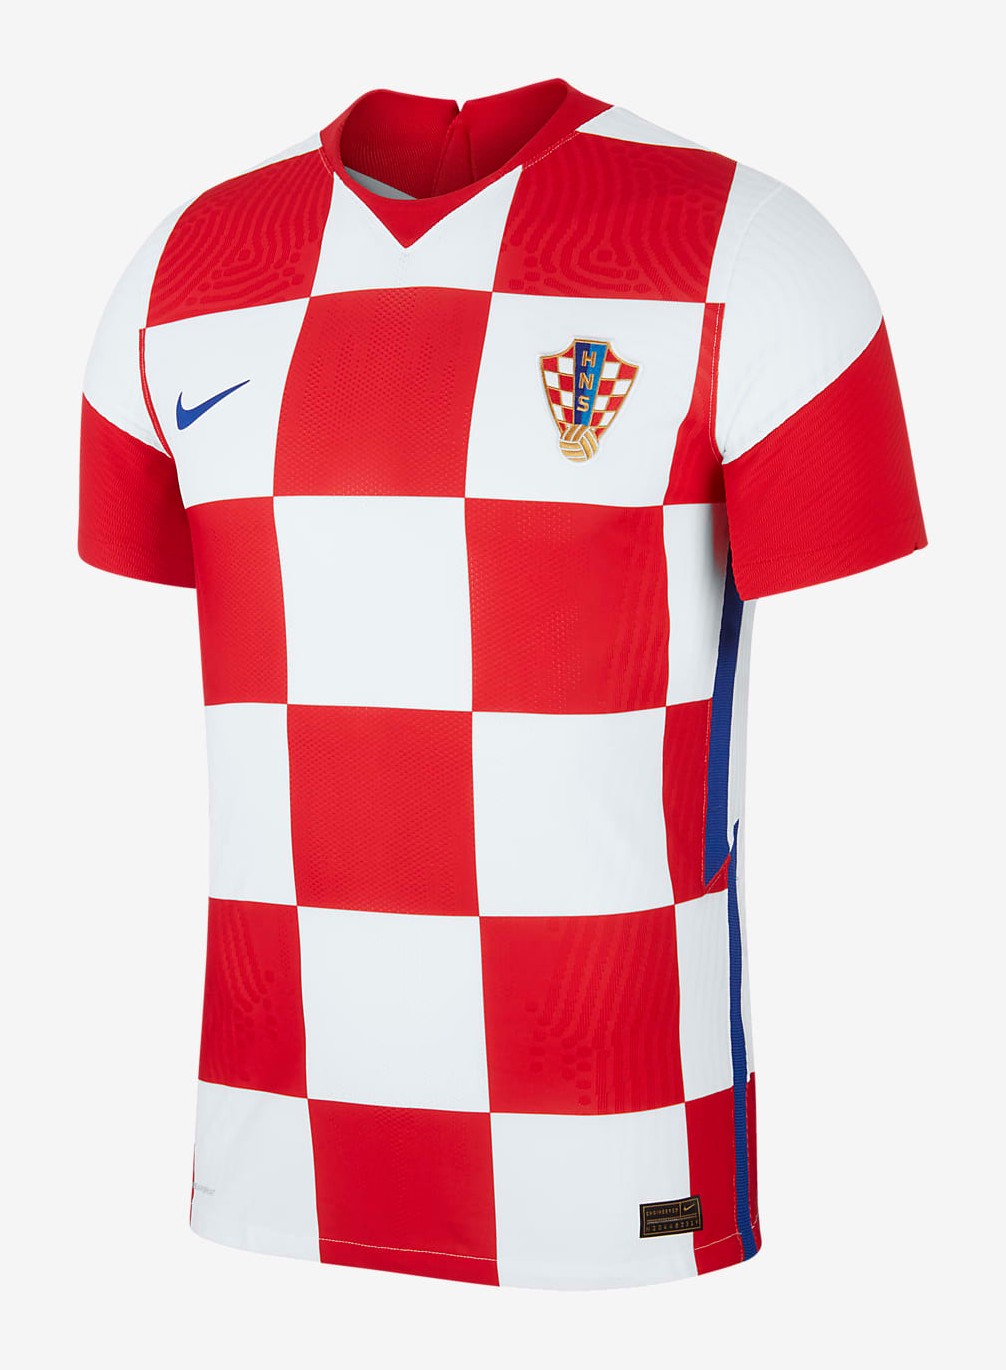 Buy > croatia 1998 shirt > in stock